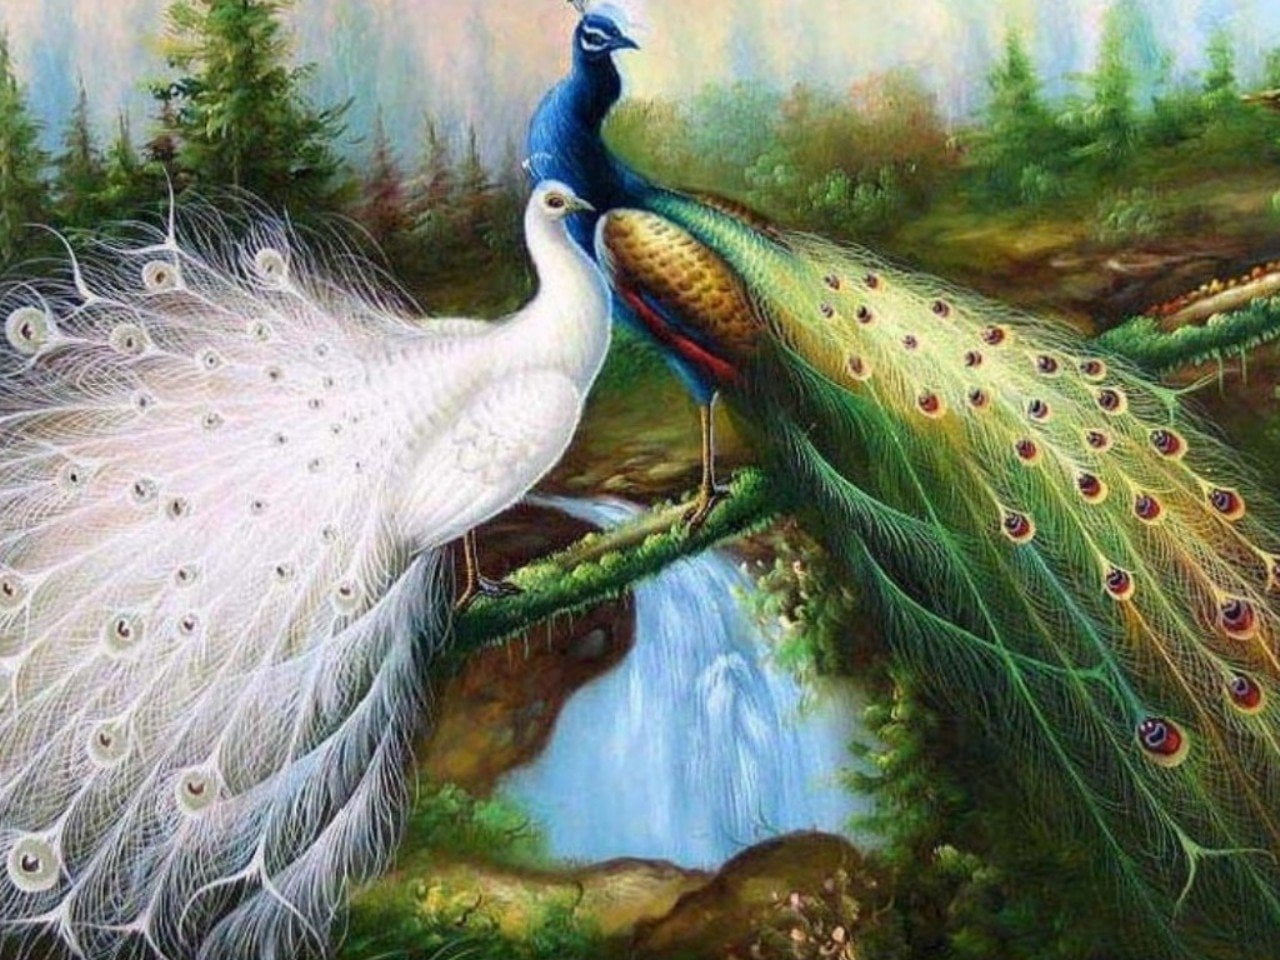 white and green peacock artwork, Birds, animal, nature, wildlife